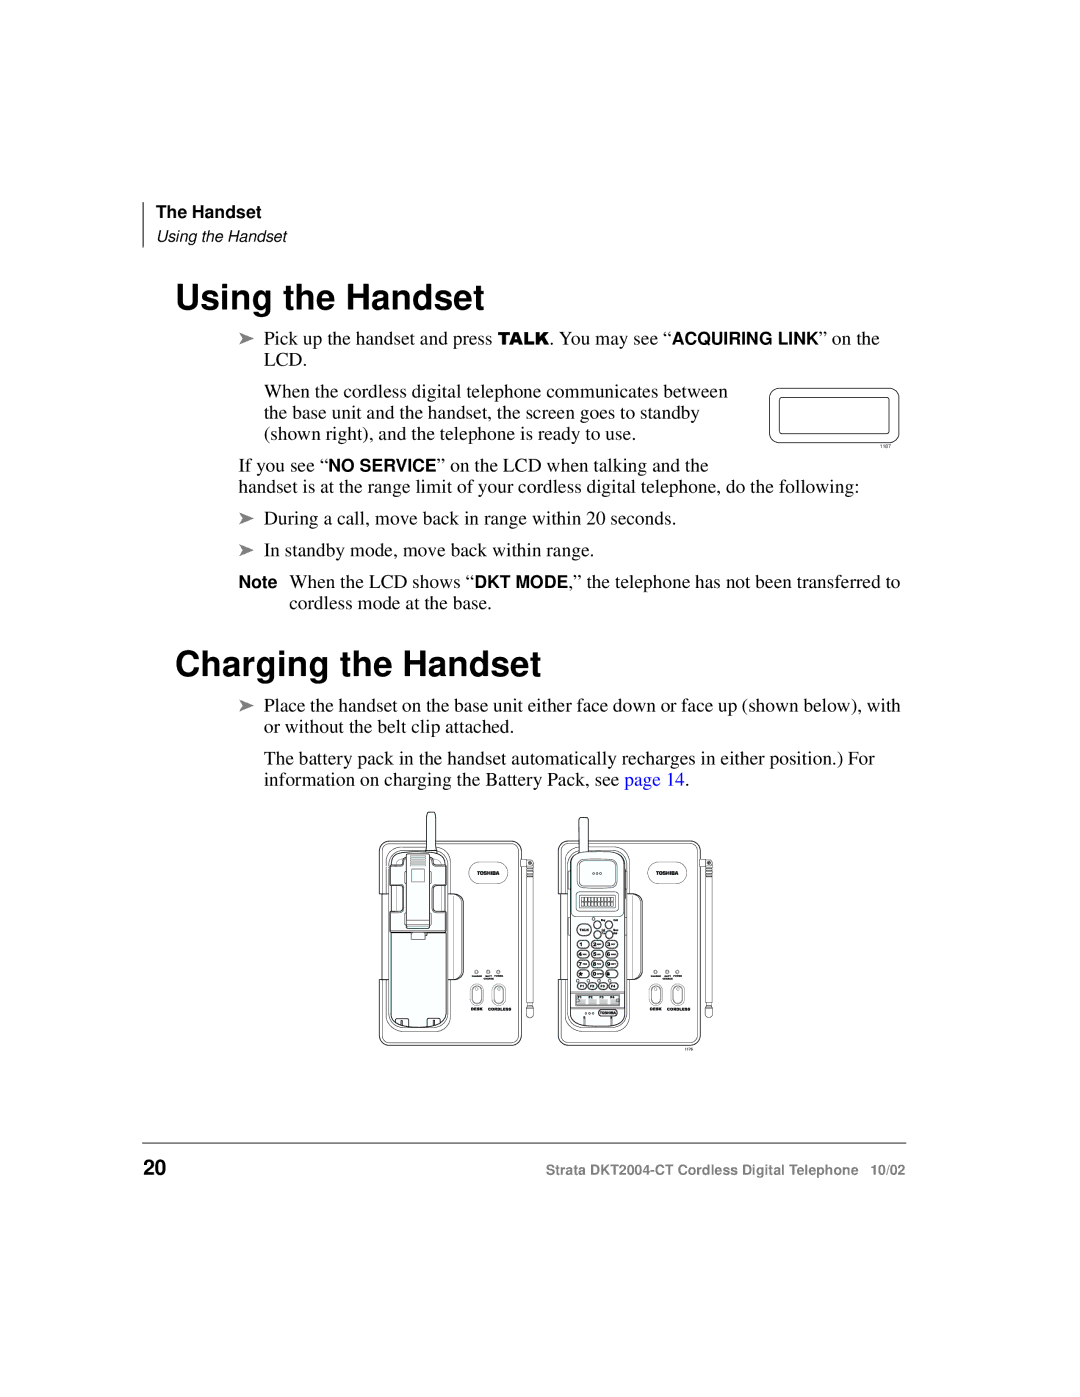 Toshiba DKT2004-CT manual Using the Handset, Charging the Handset 